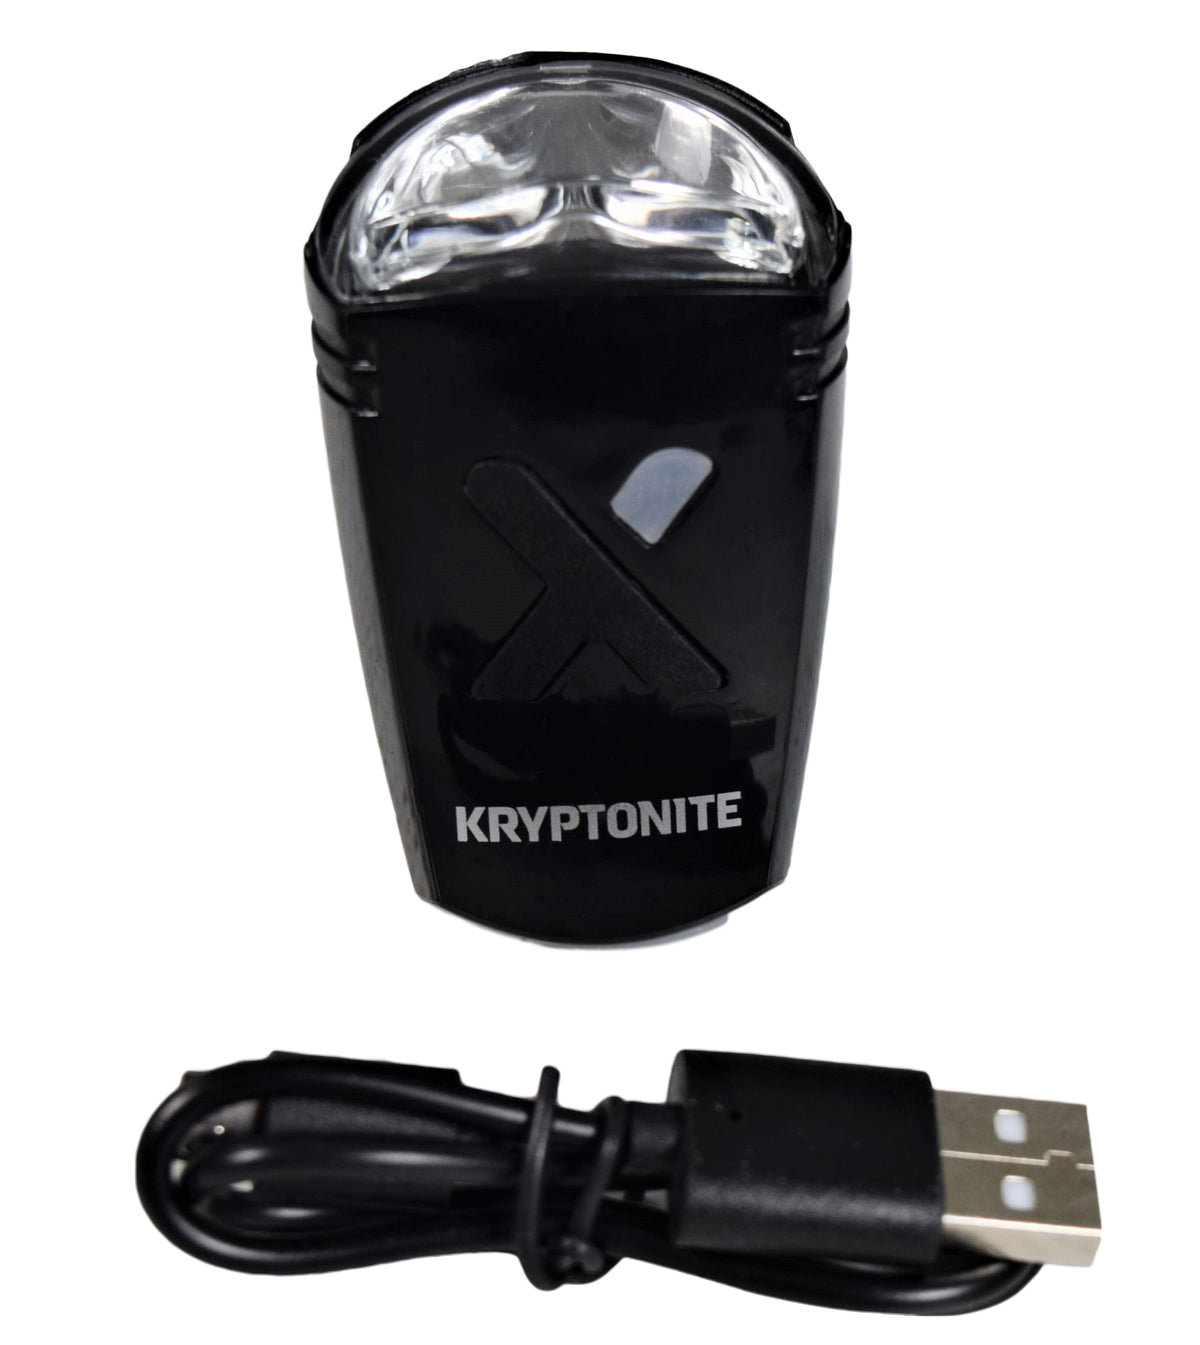 Kryptonite Pulsar F-65 Front Bicycle Light LED USB Charging 65 Lumen